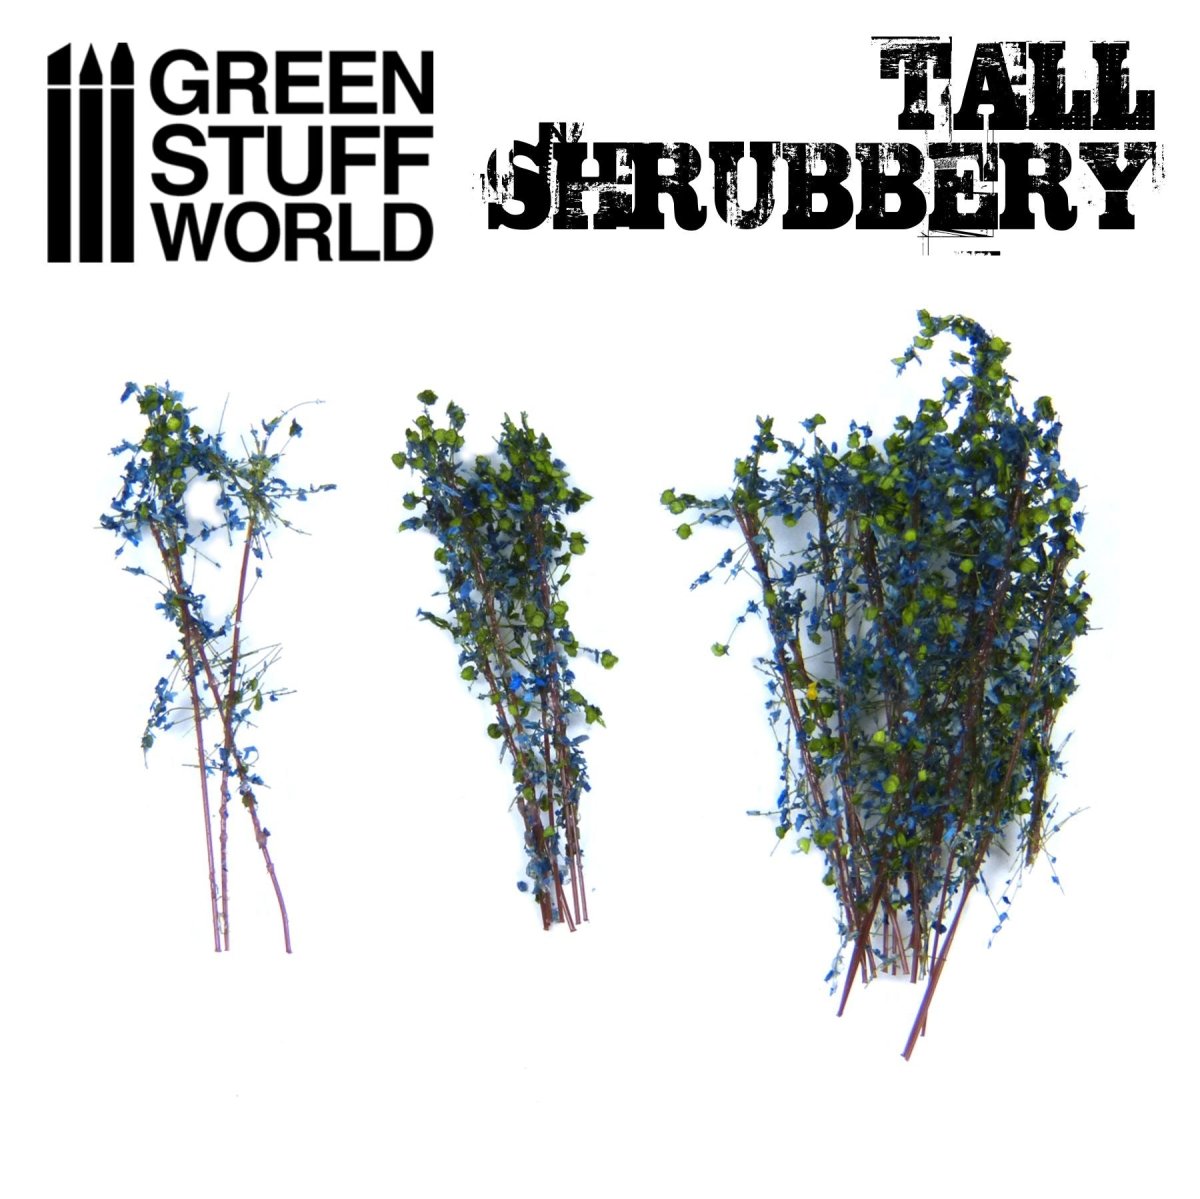 Tall Shrubbery - Blue Green 4CM tall - Green Stuff World - 1 blister pack - Gootzy Gaming